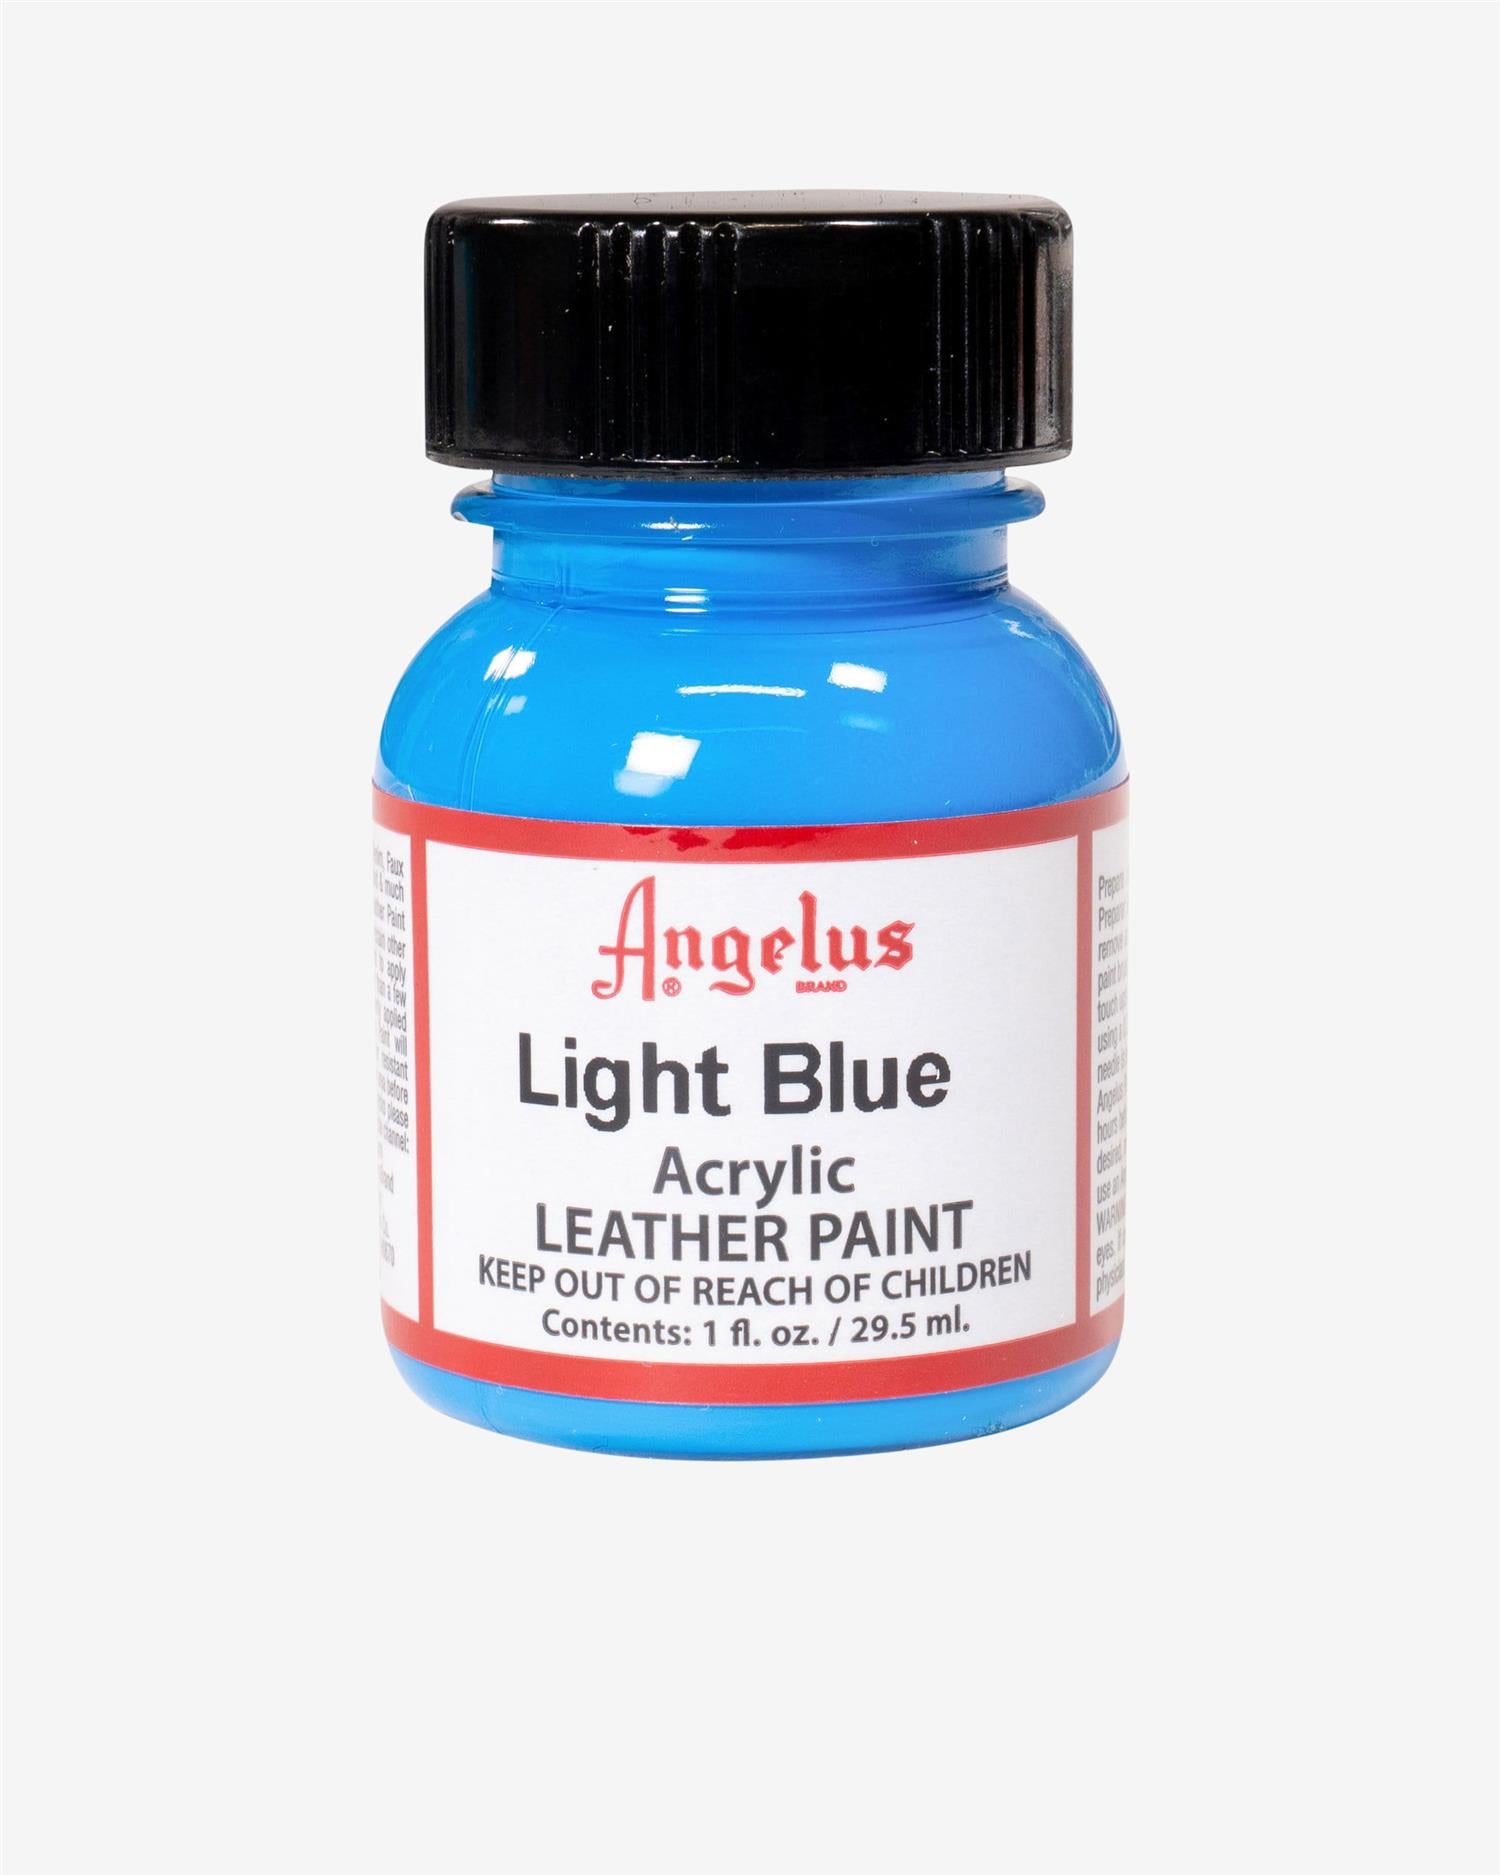 ACRYLIC LEATHER PAINT - LIGHT BLUE